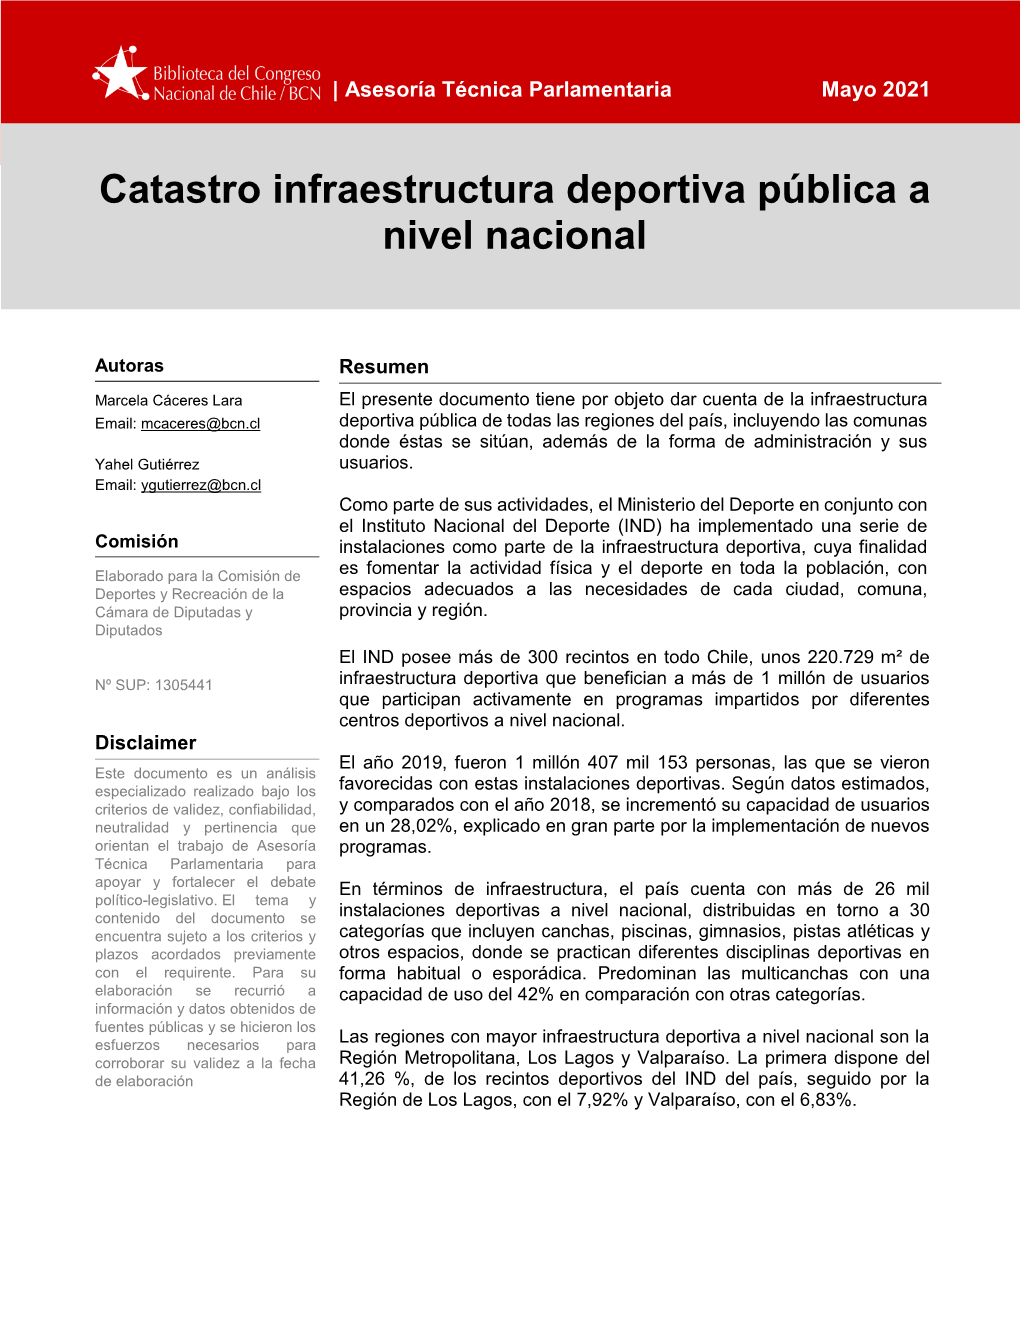 Catastro Infraestructura Deportiva Pública a Nivel Nacional